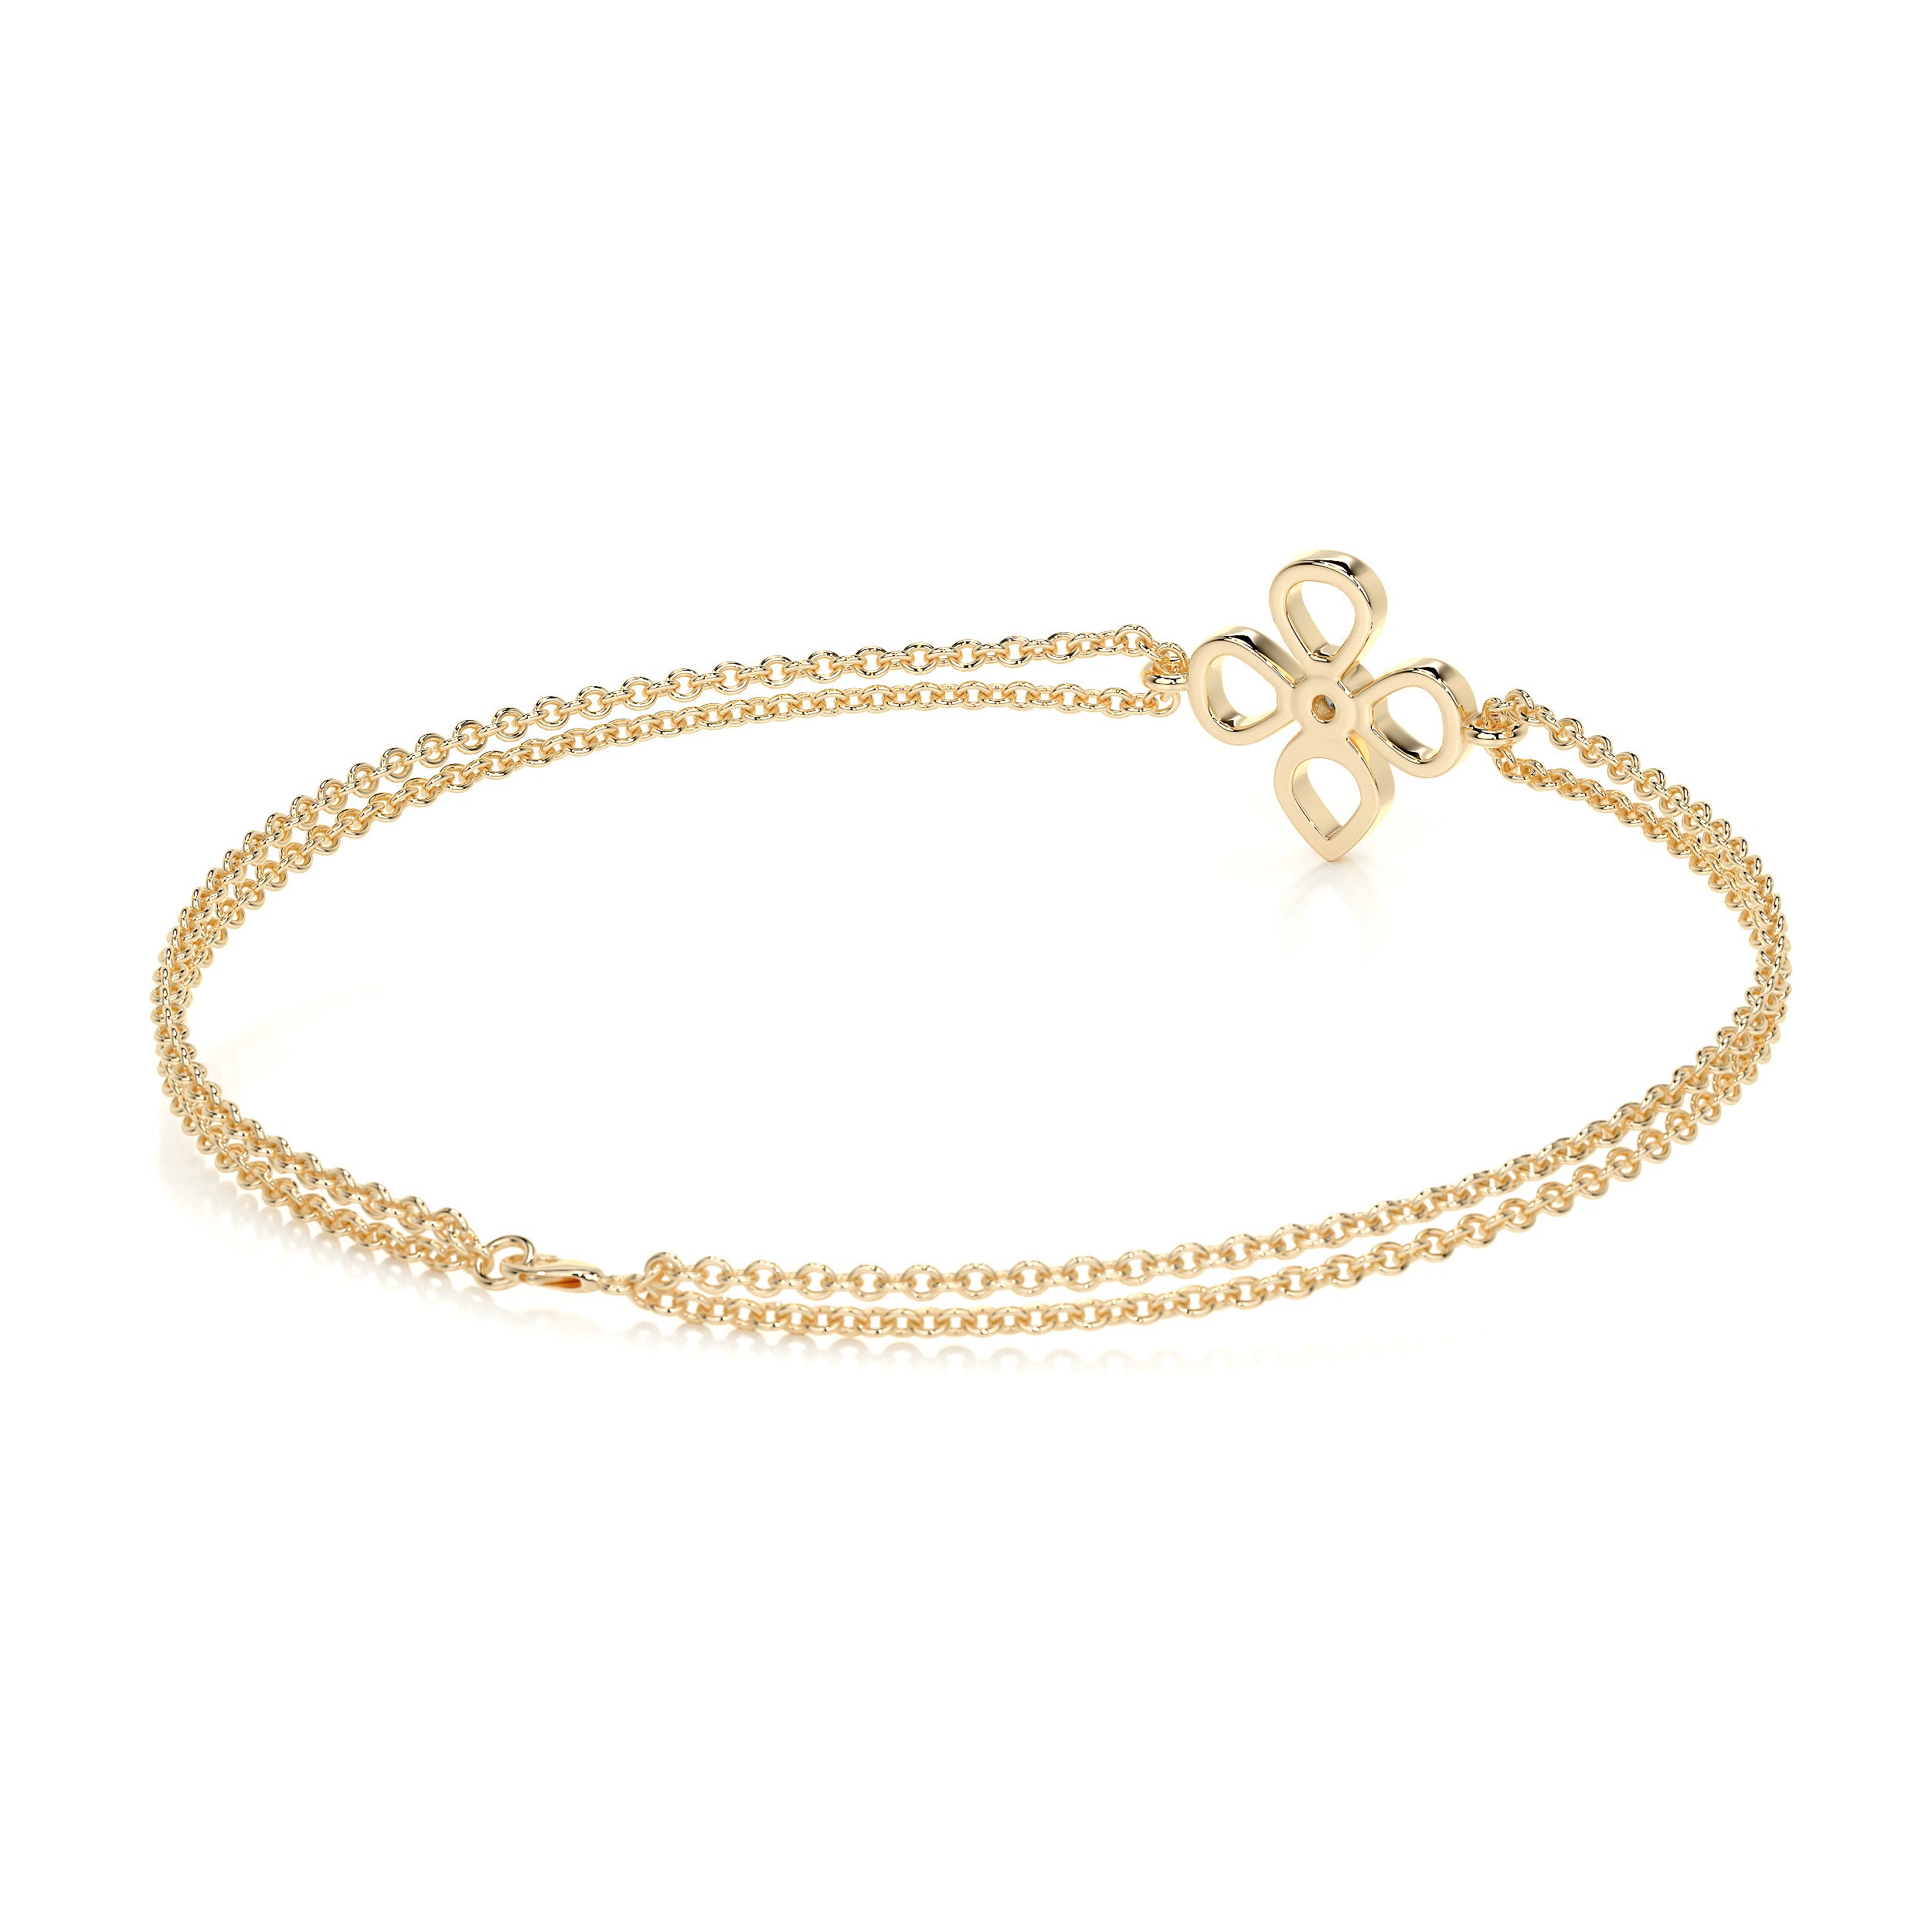 Dolores Lab Grown Diamonds Bracelet   (0.02 Carat) -18K Yellow Gold